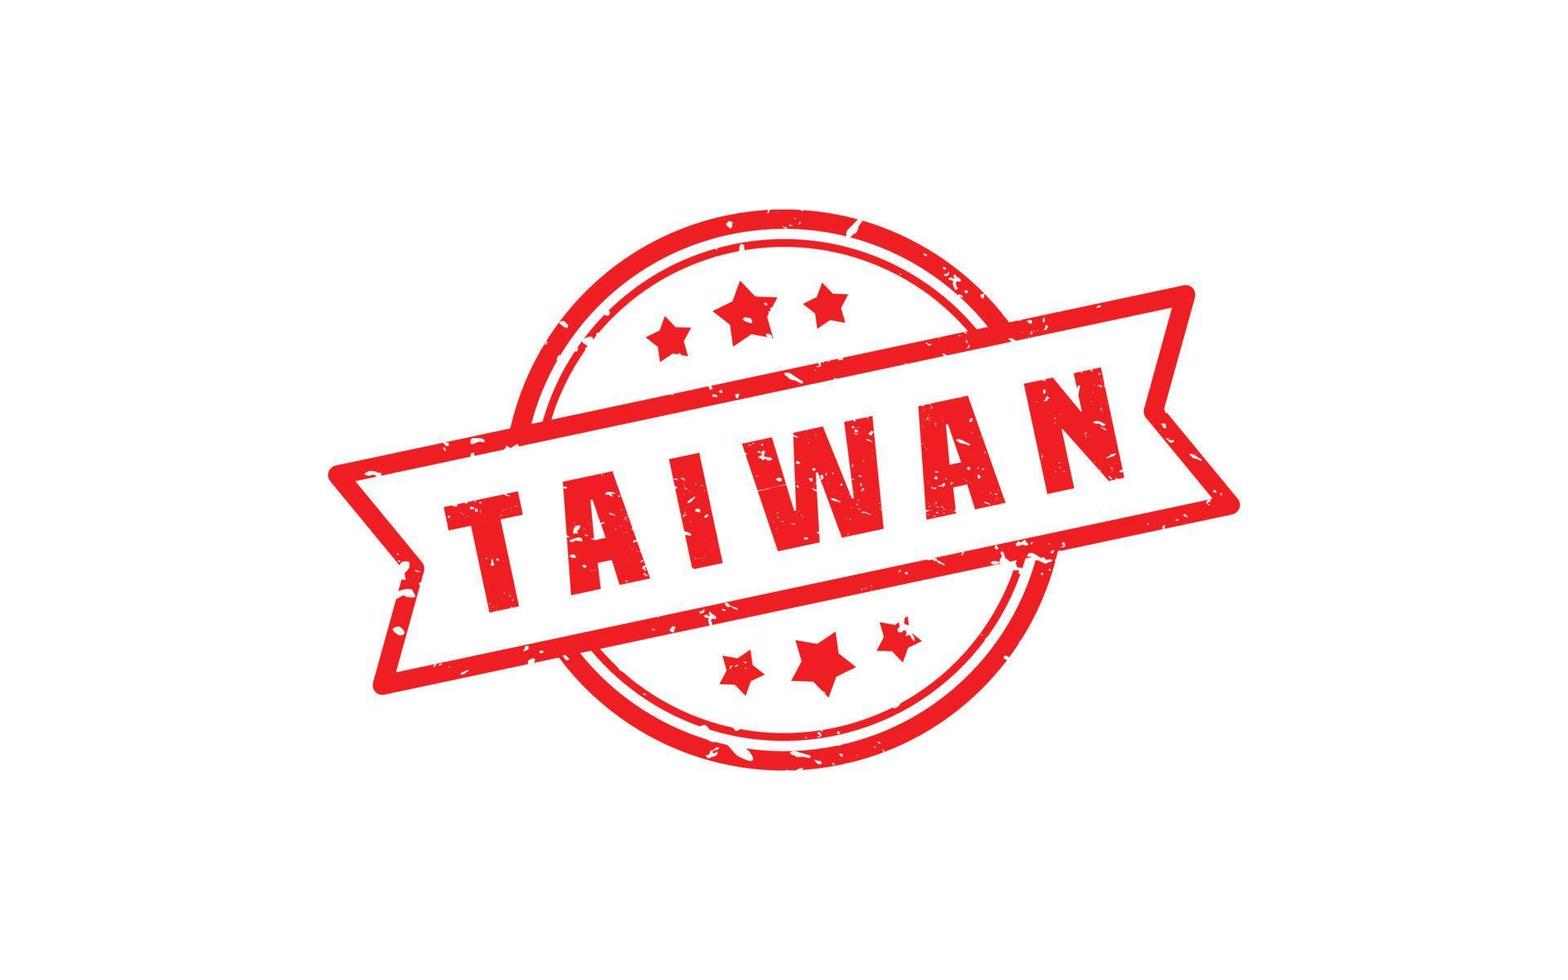 Taiwan carimbo borracha com grunge estilo em branco fundo vetor